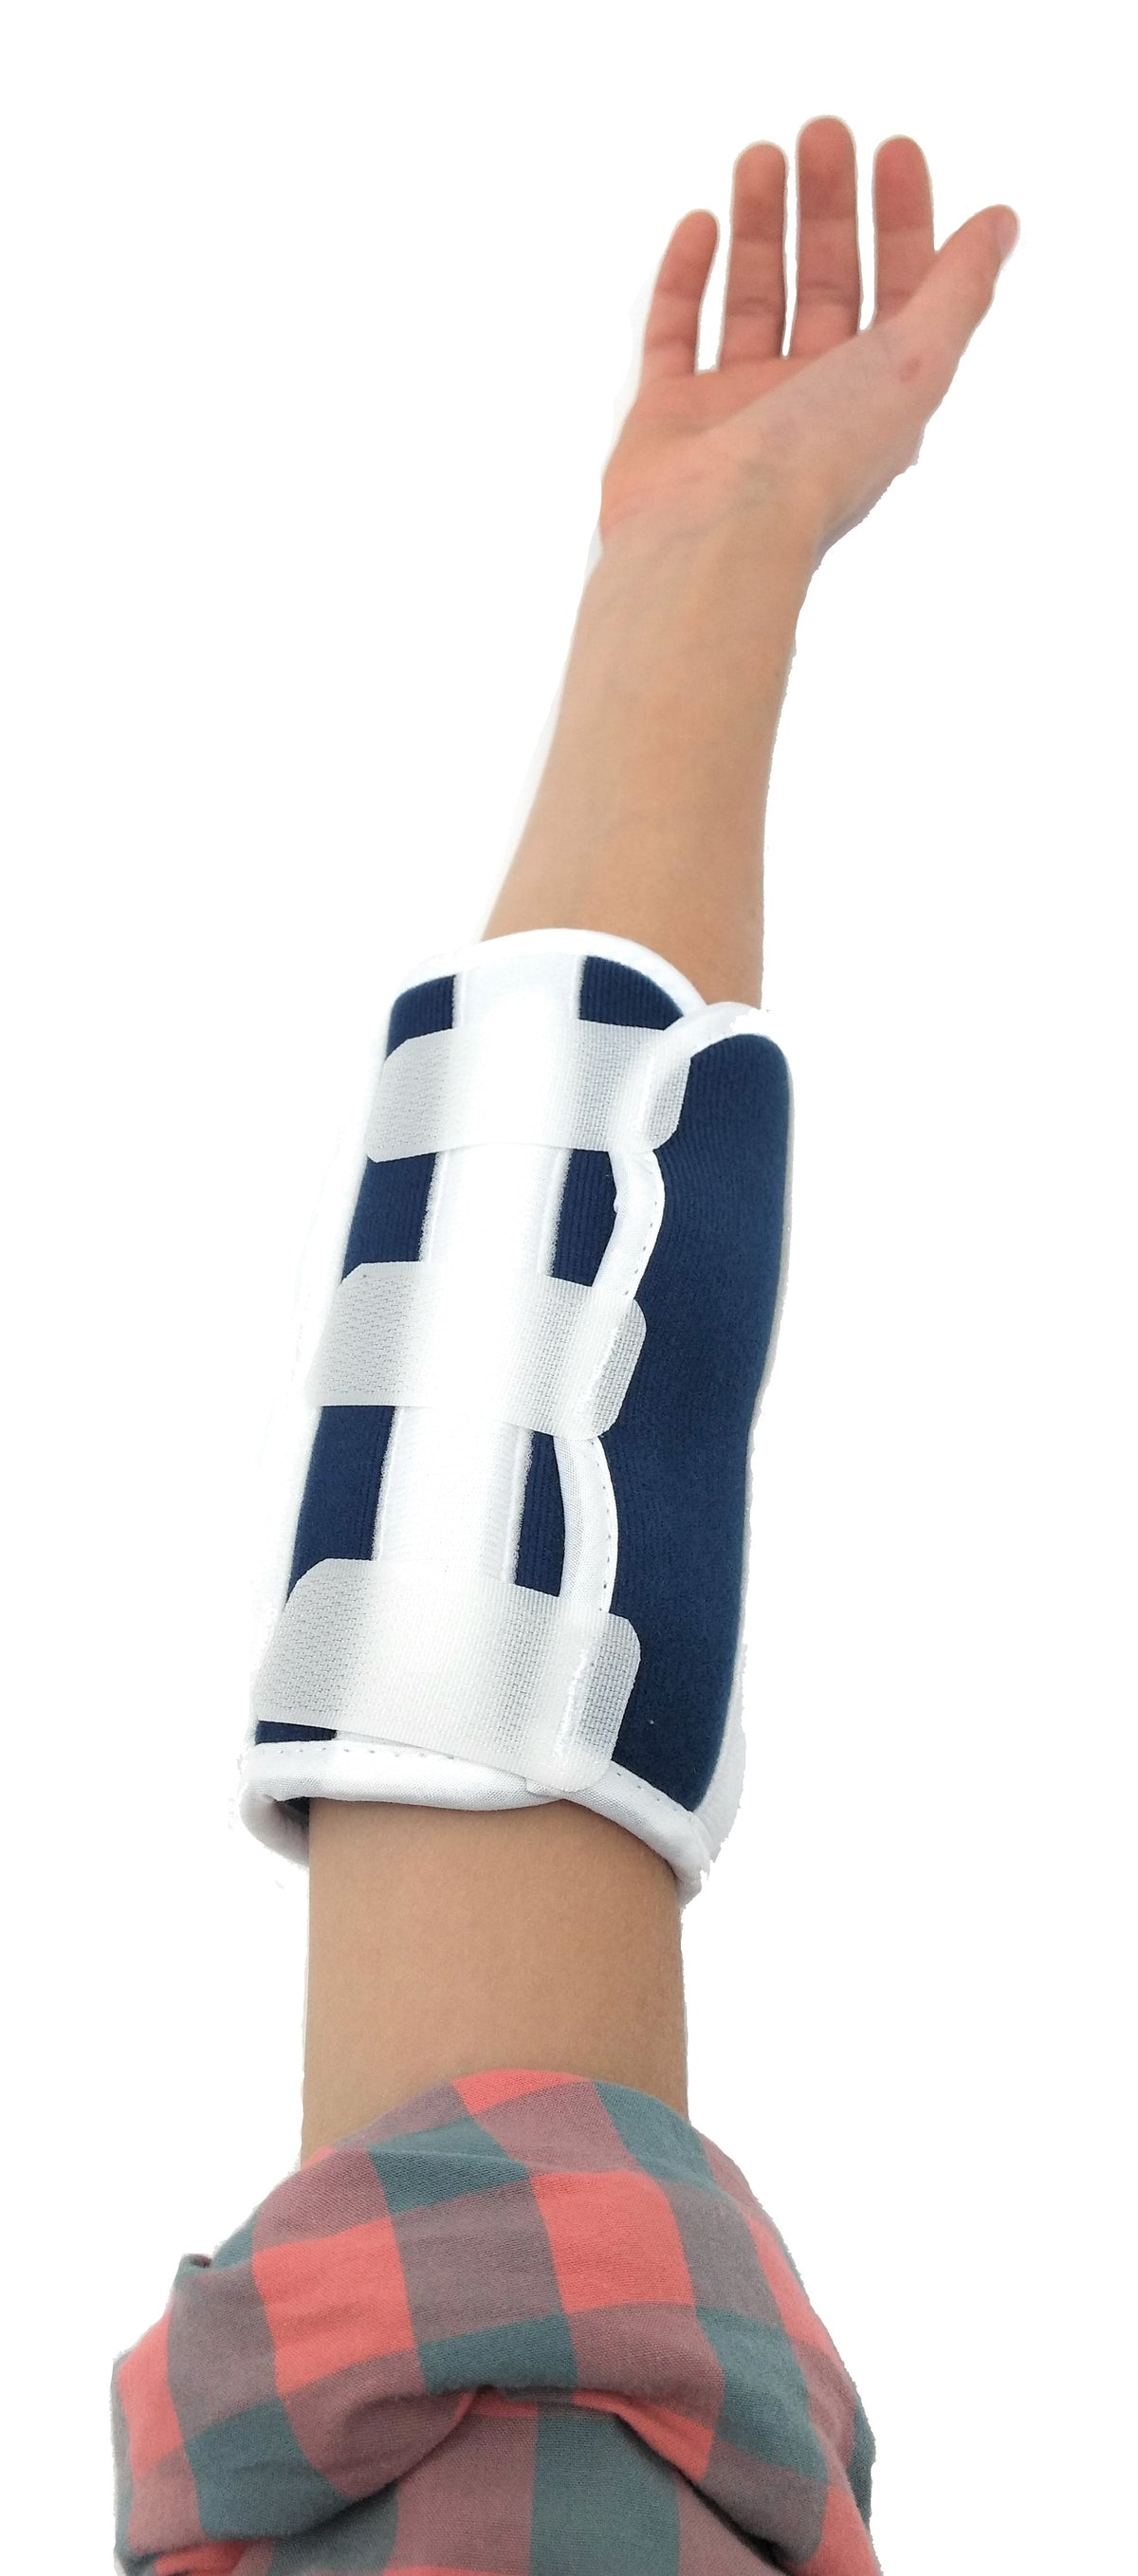 Premium Pediatric Child Elbow Immobilizer Stabilizer Splint/Arm Restraint (Youth) - Mars Med Supply